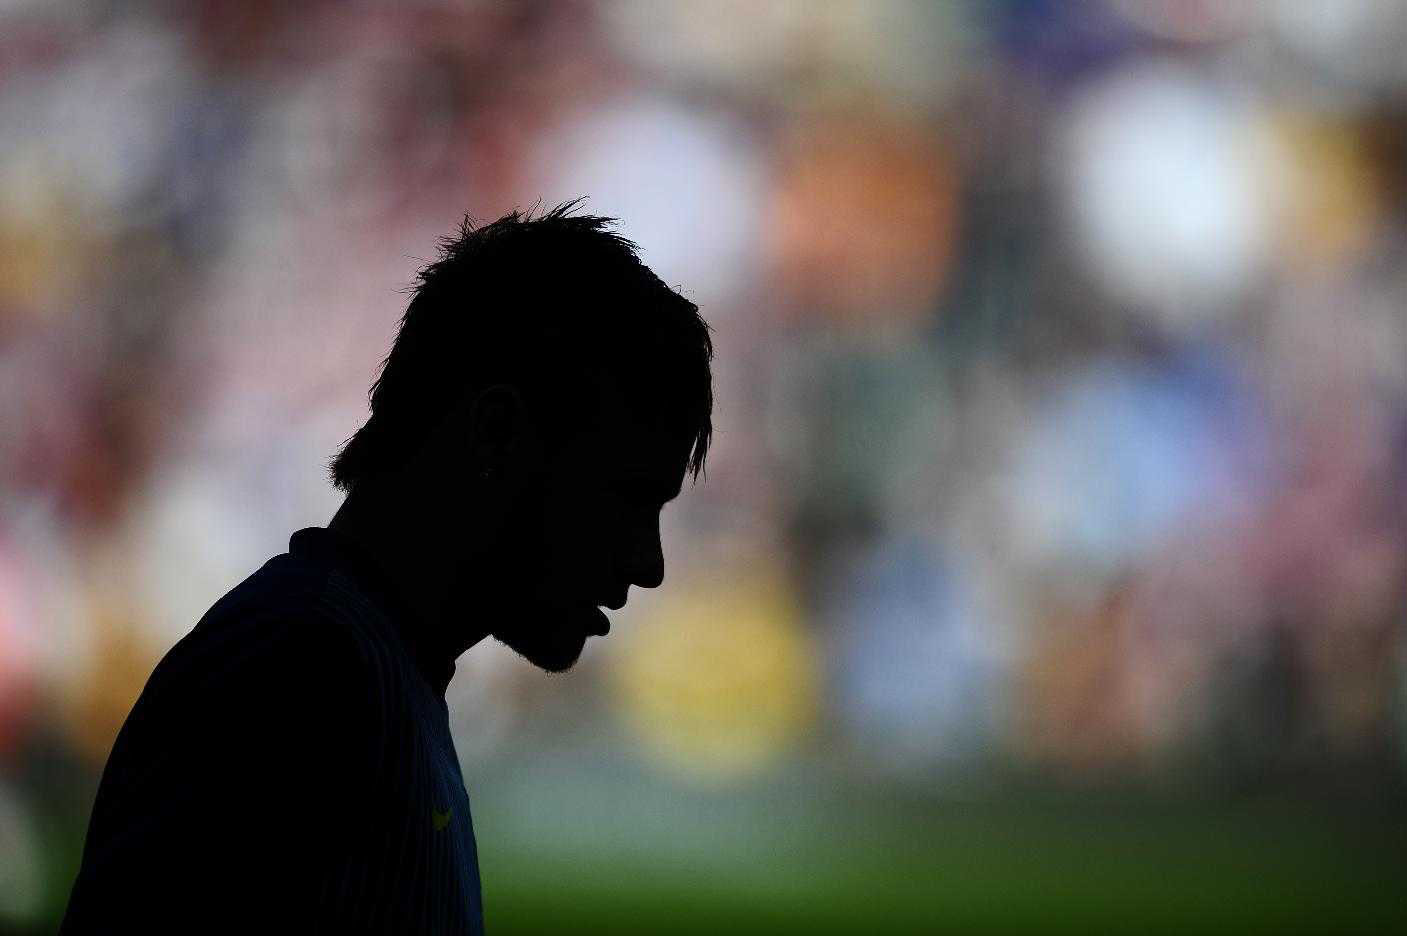 Neymar shade in the dark